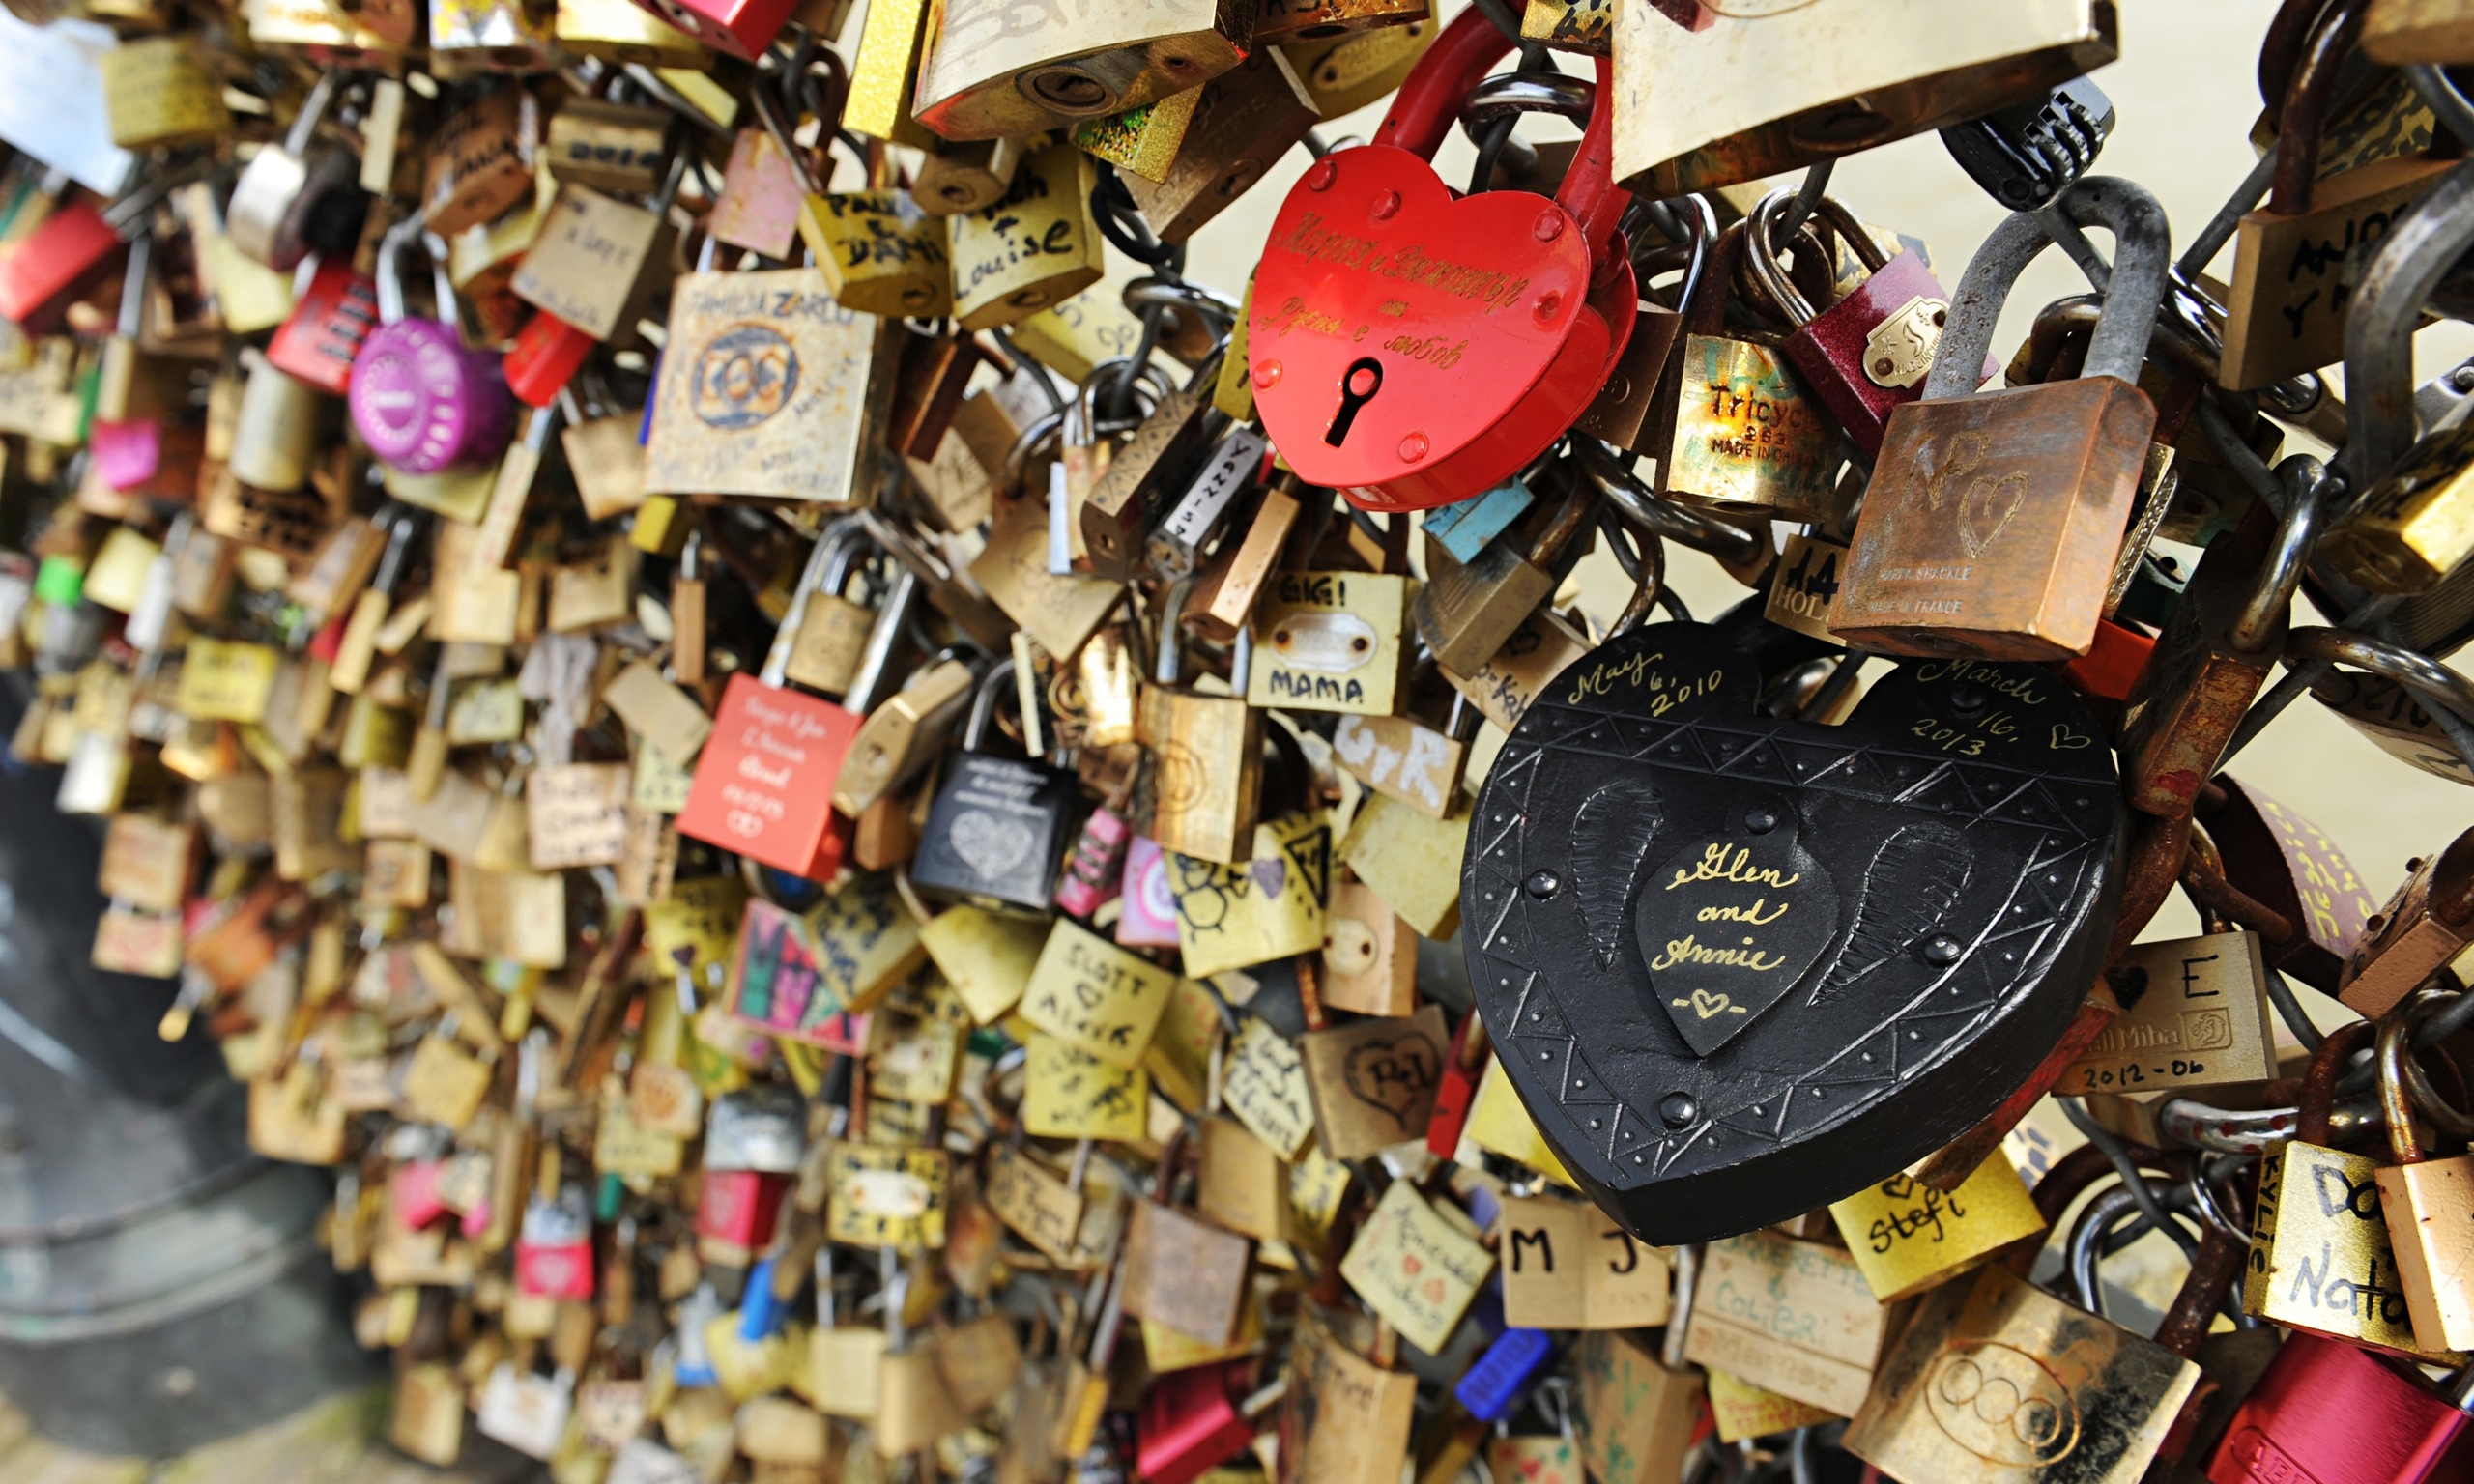 Love locks break bridges - and make me hate romance | Stuart ...